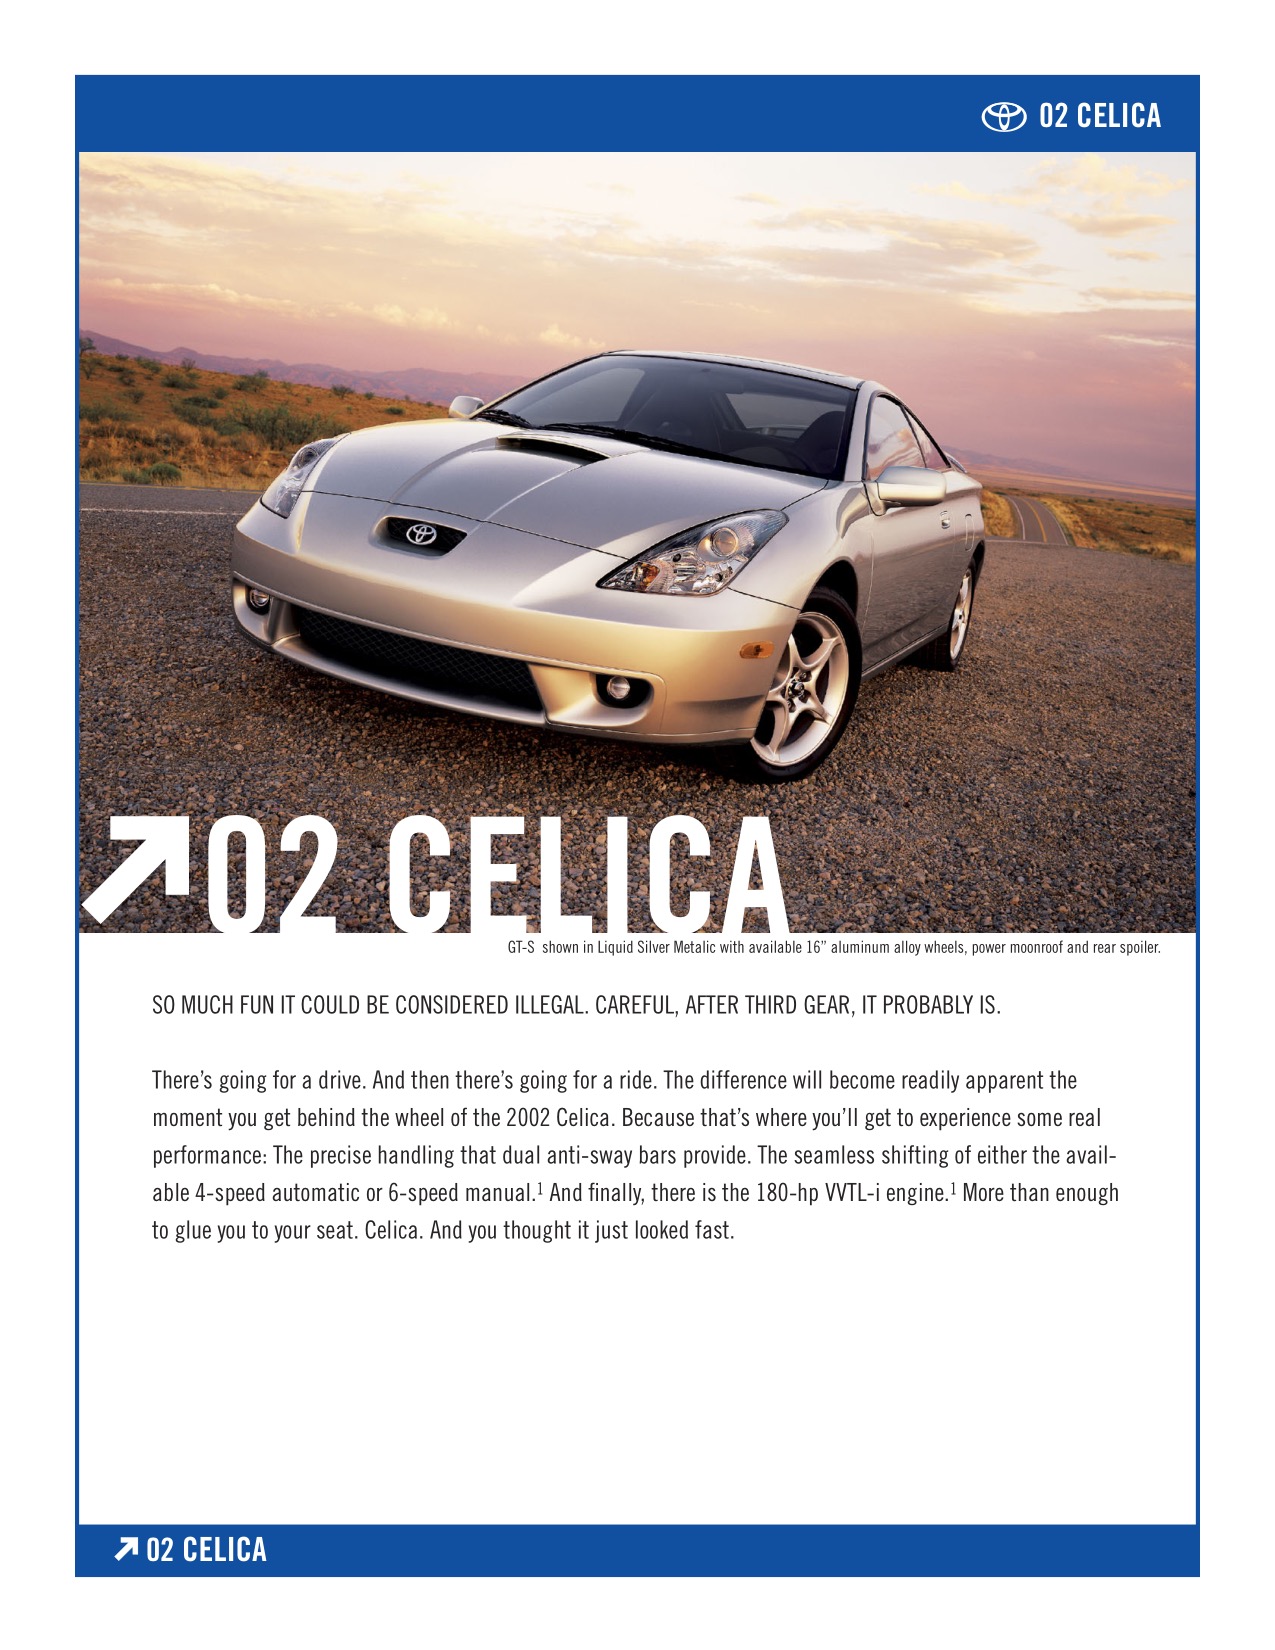 2002 Toyota Celica Brochure